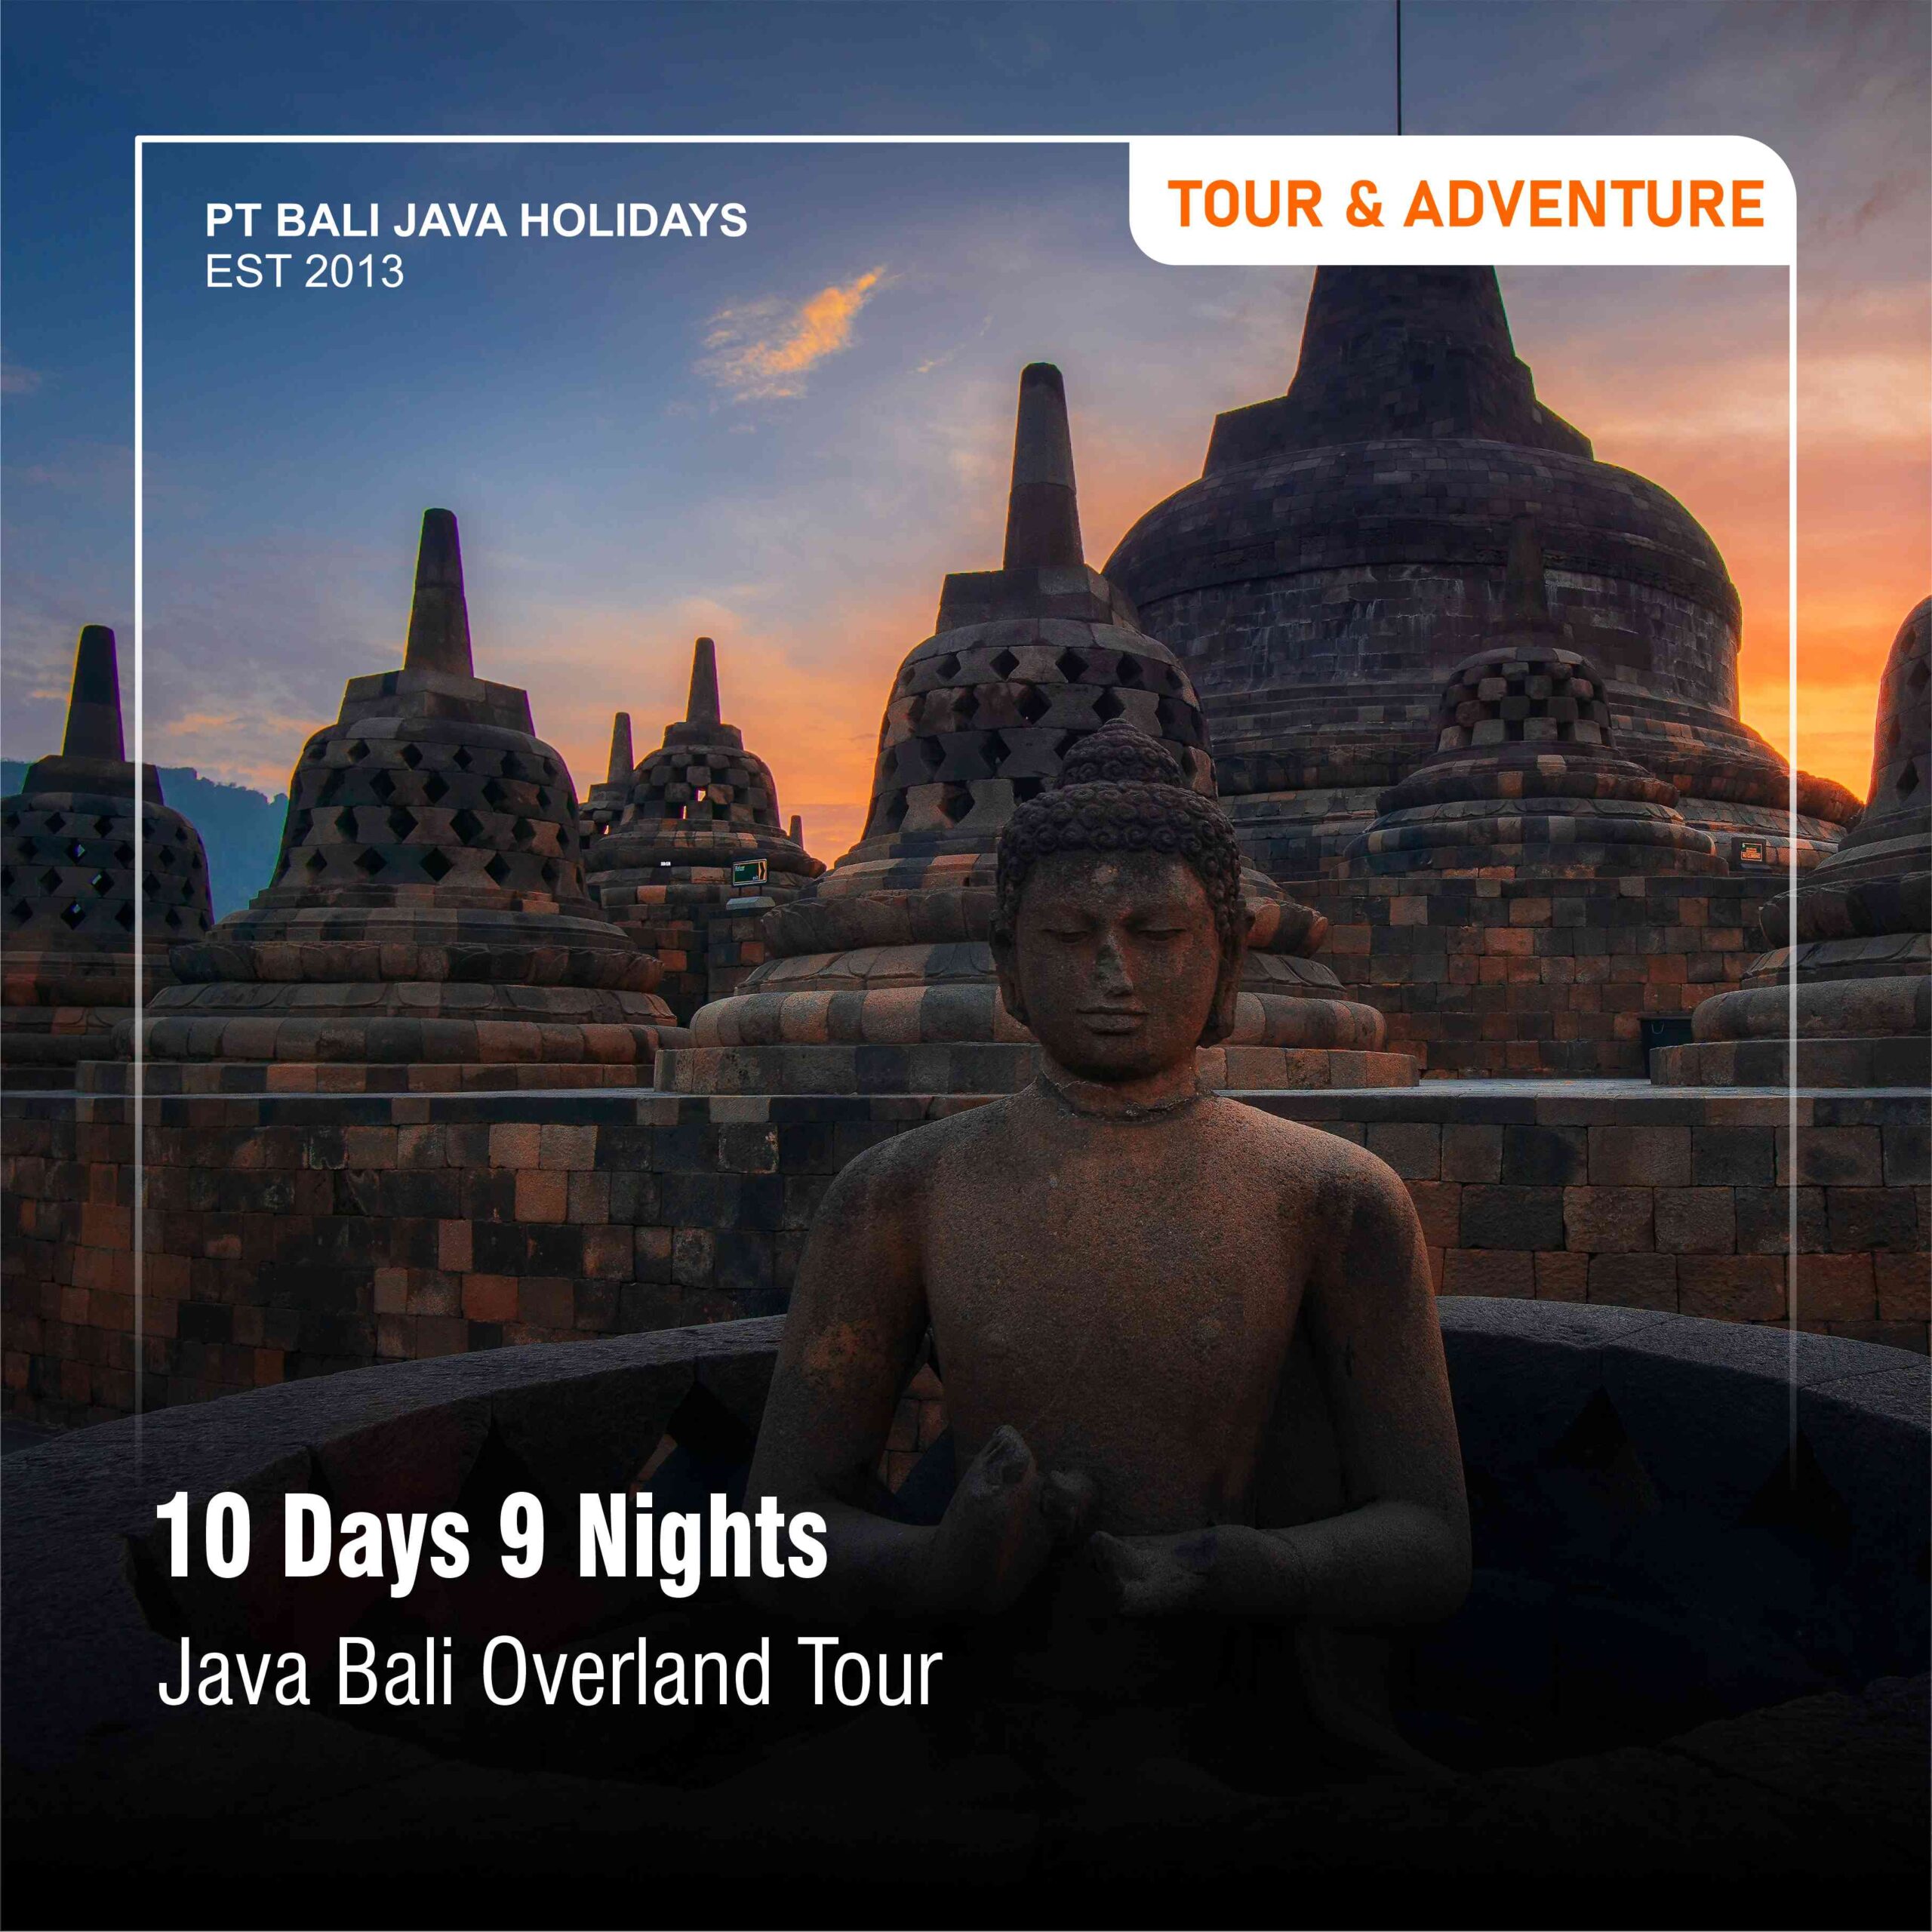 Java Bali Overland Tour 10 Days 9 Nights